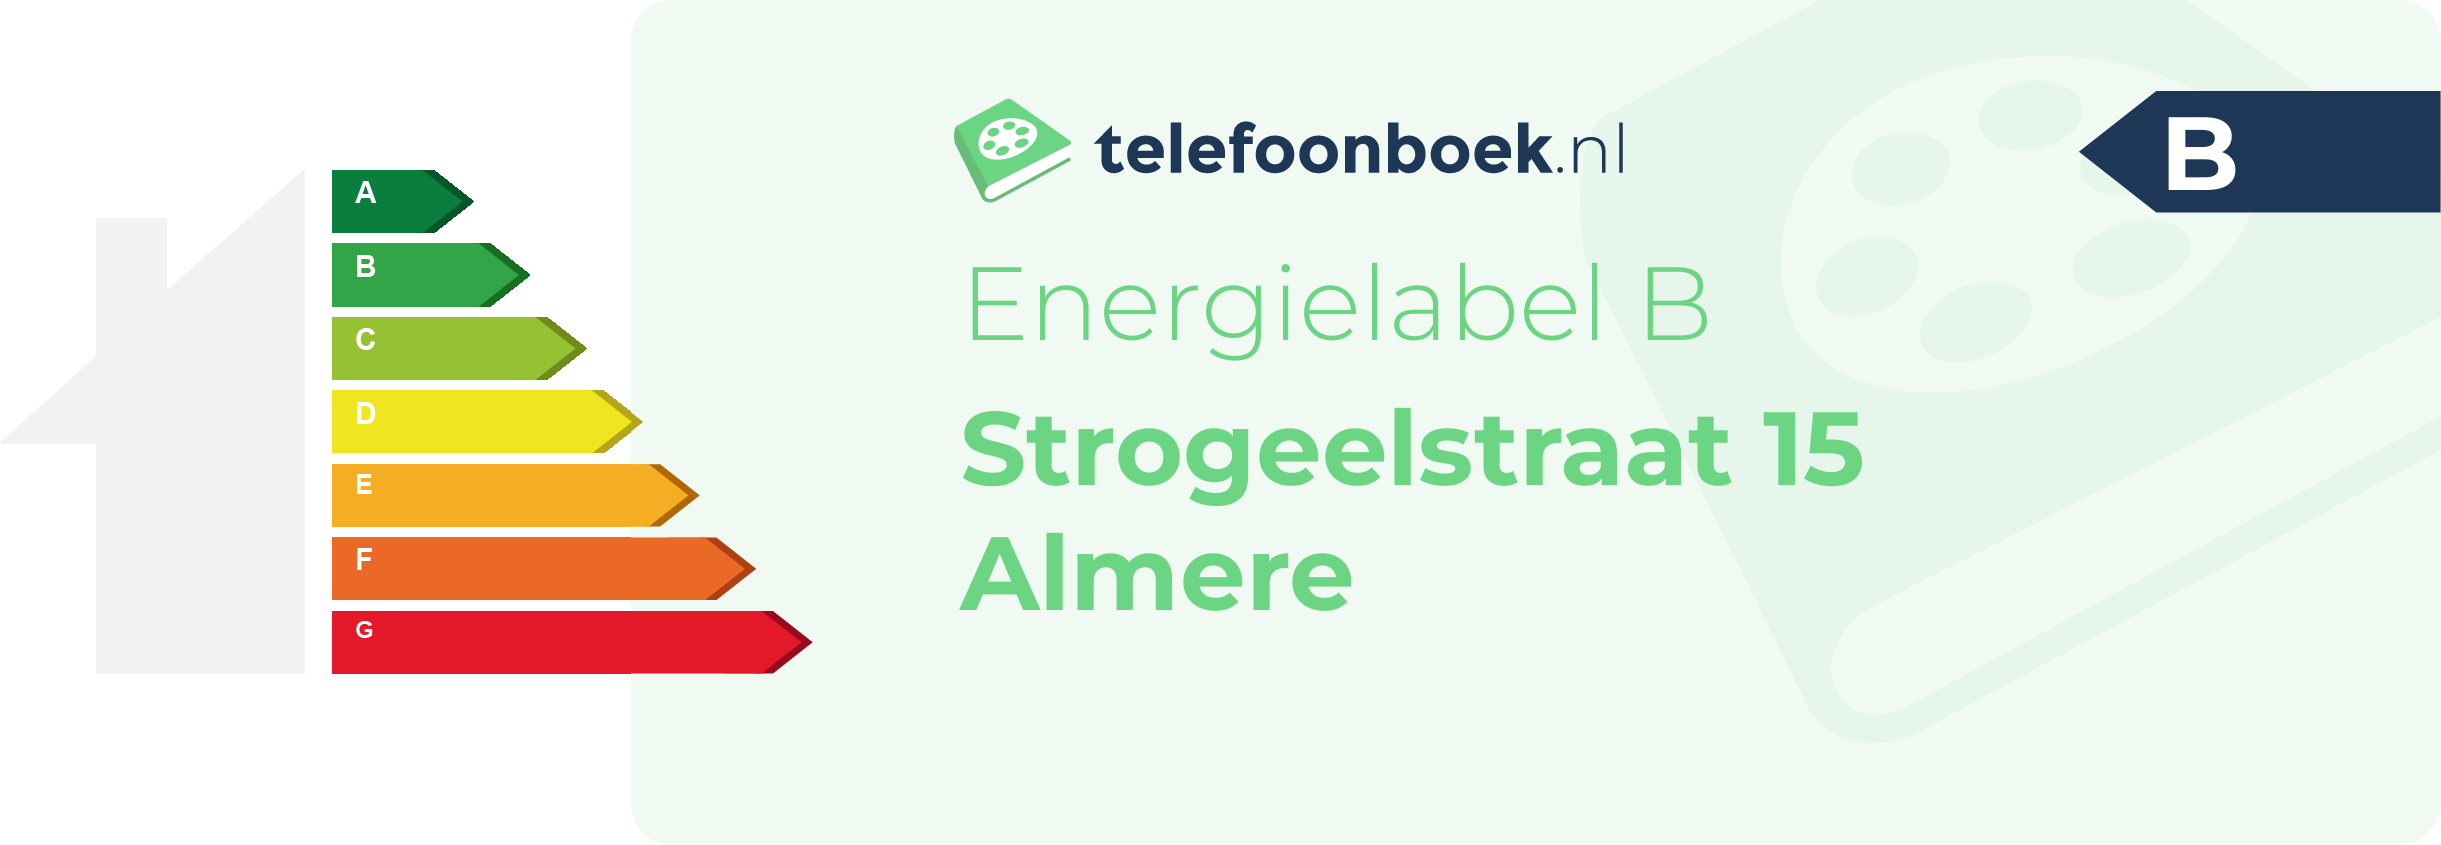 Energielabel Strogeelstraat 15 Almere